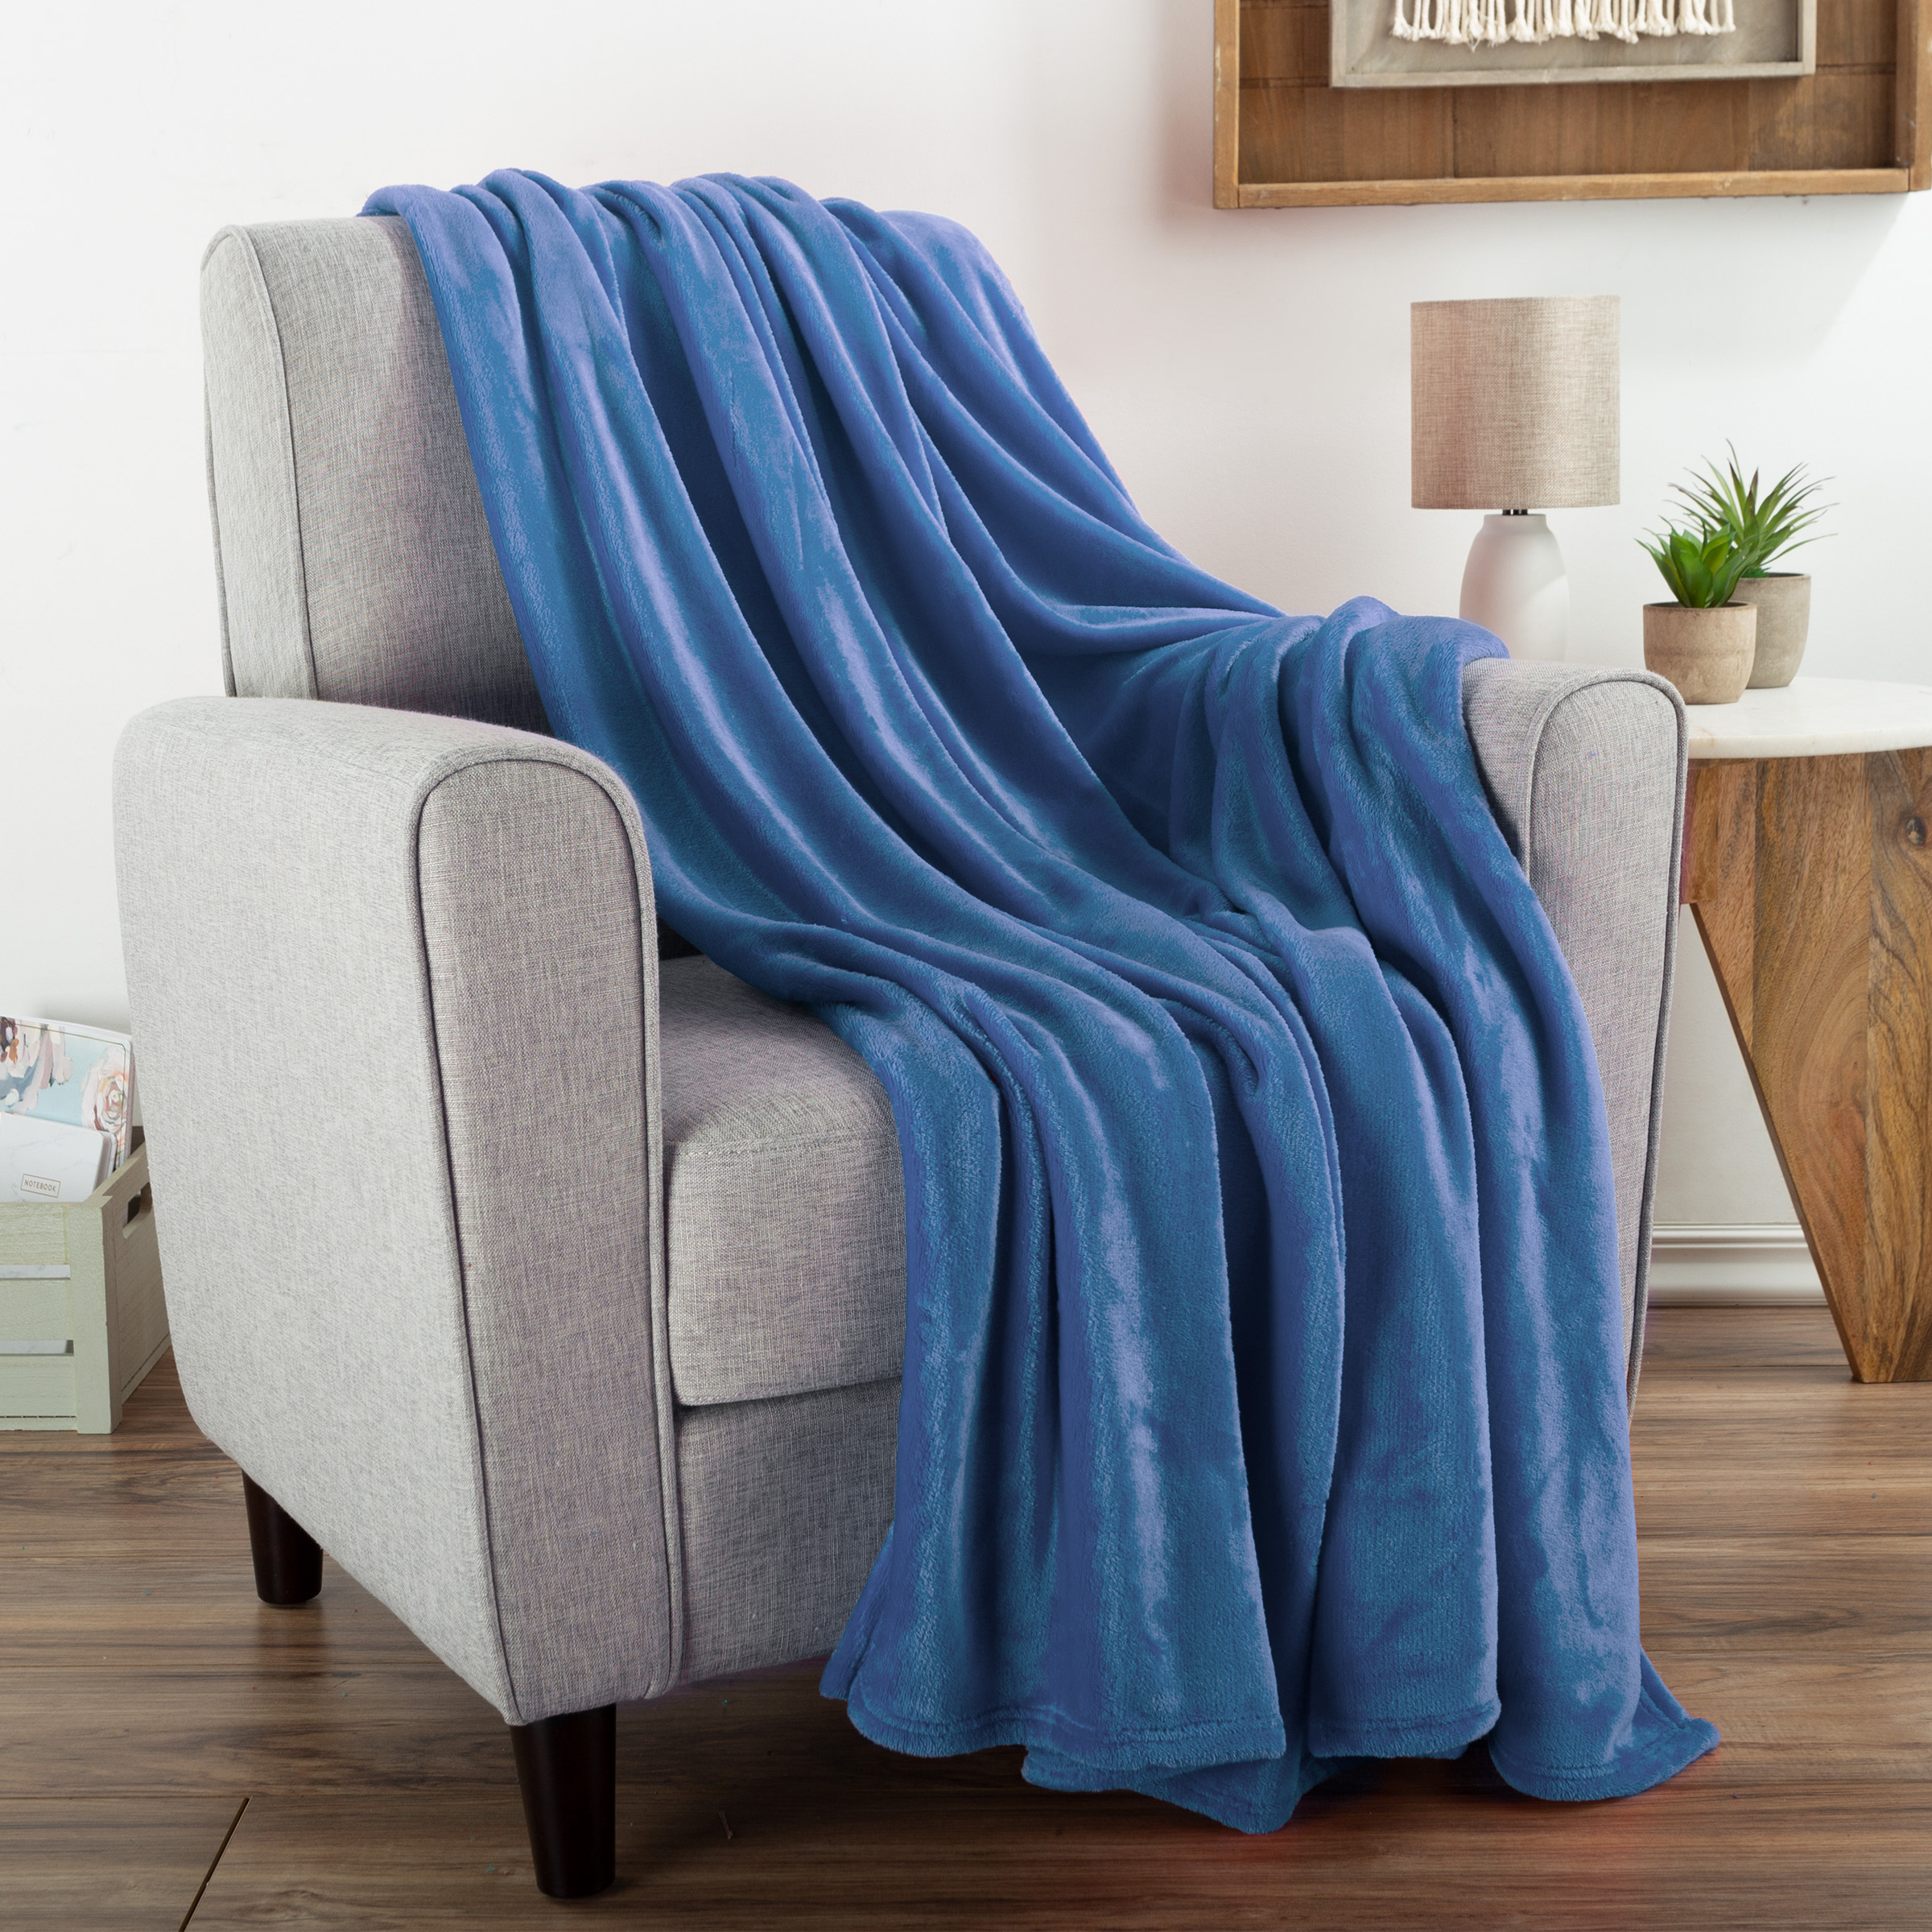 Fleece Throw Blanket- For Couch, Home Décor, Sofa & Chair- Oversized 60” X 70”- Lightweight, Soft & Plush Microfiber - Blue